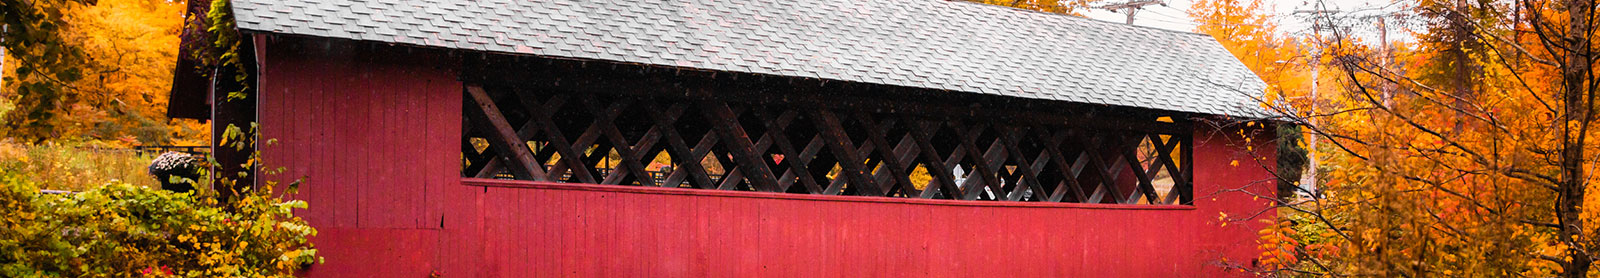 Red bridge in Vermont